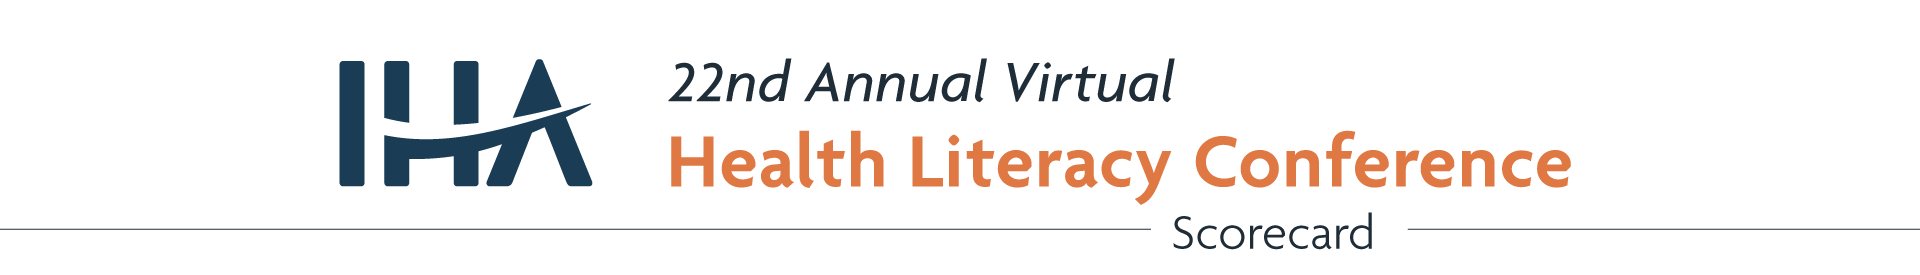 IHA 21st Annual Virtual Health Literacy Conference